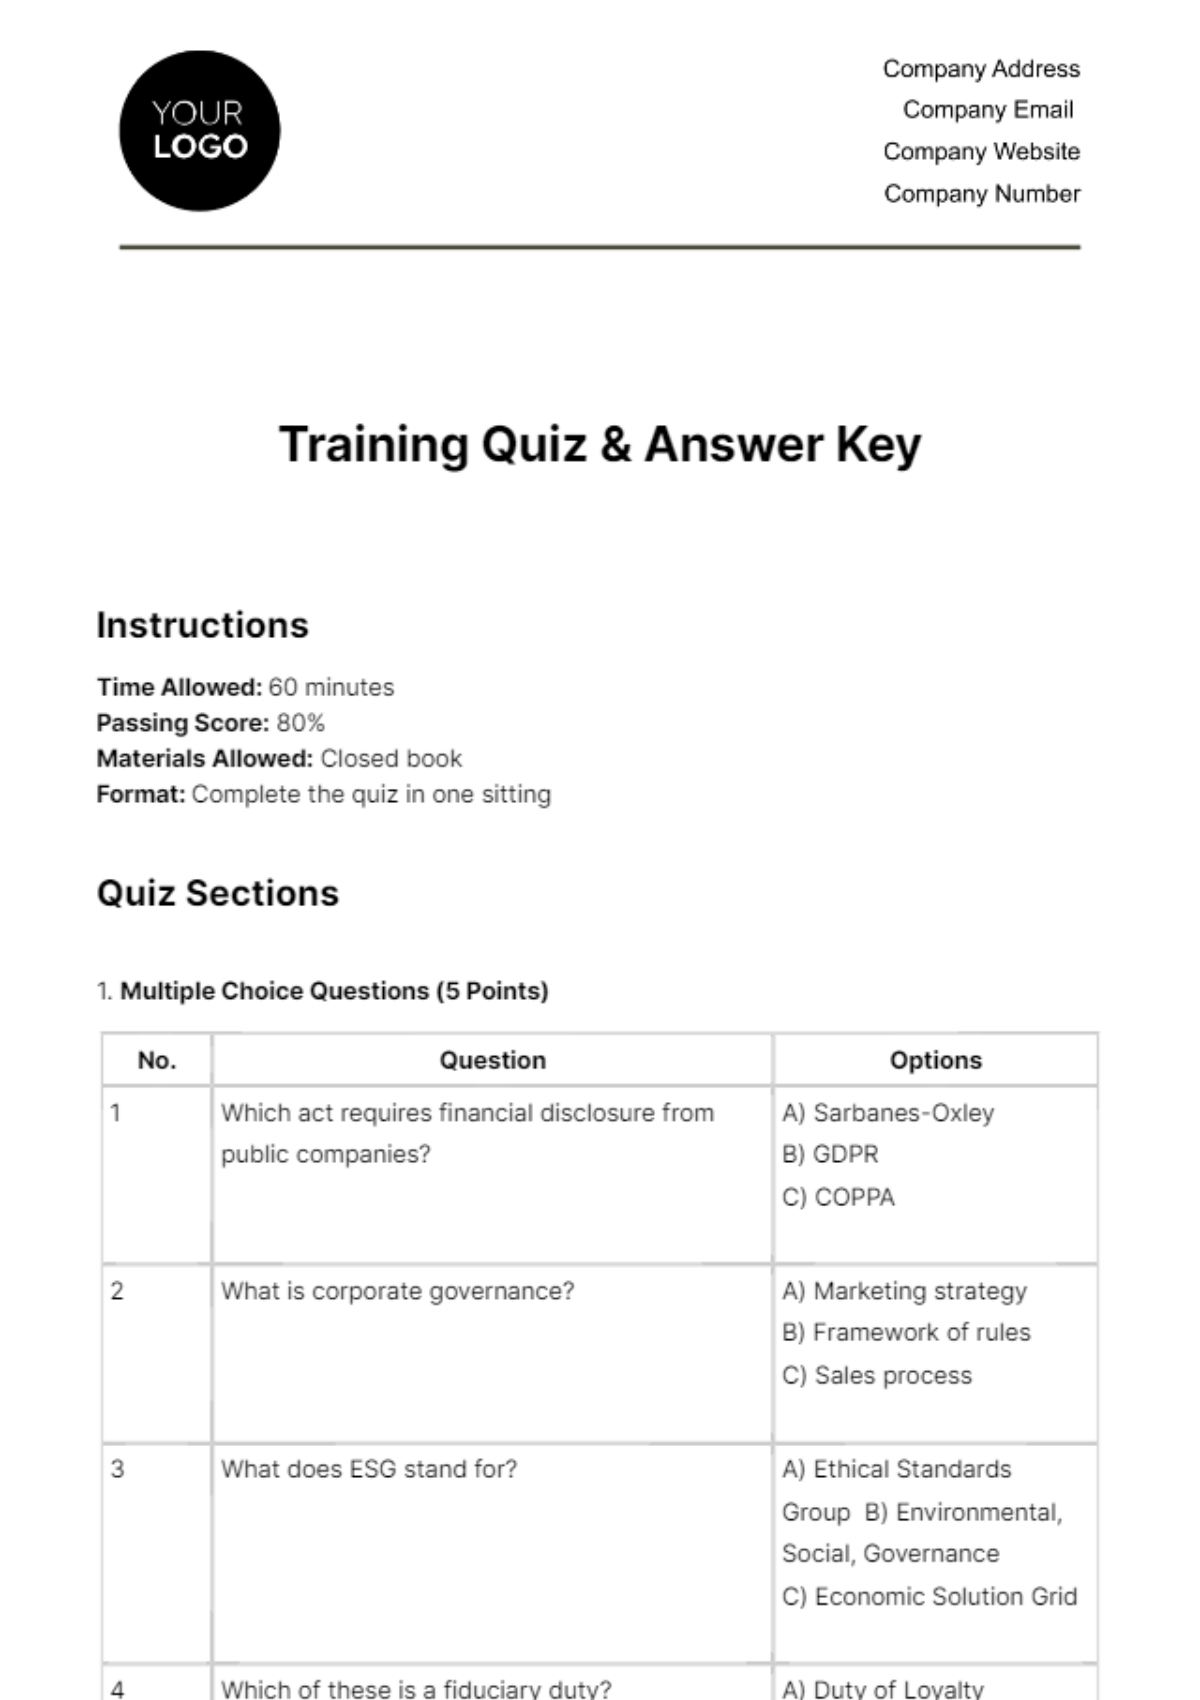 Free Training Quiz & Answer Key HR Template